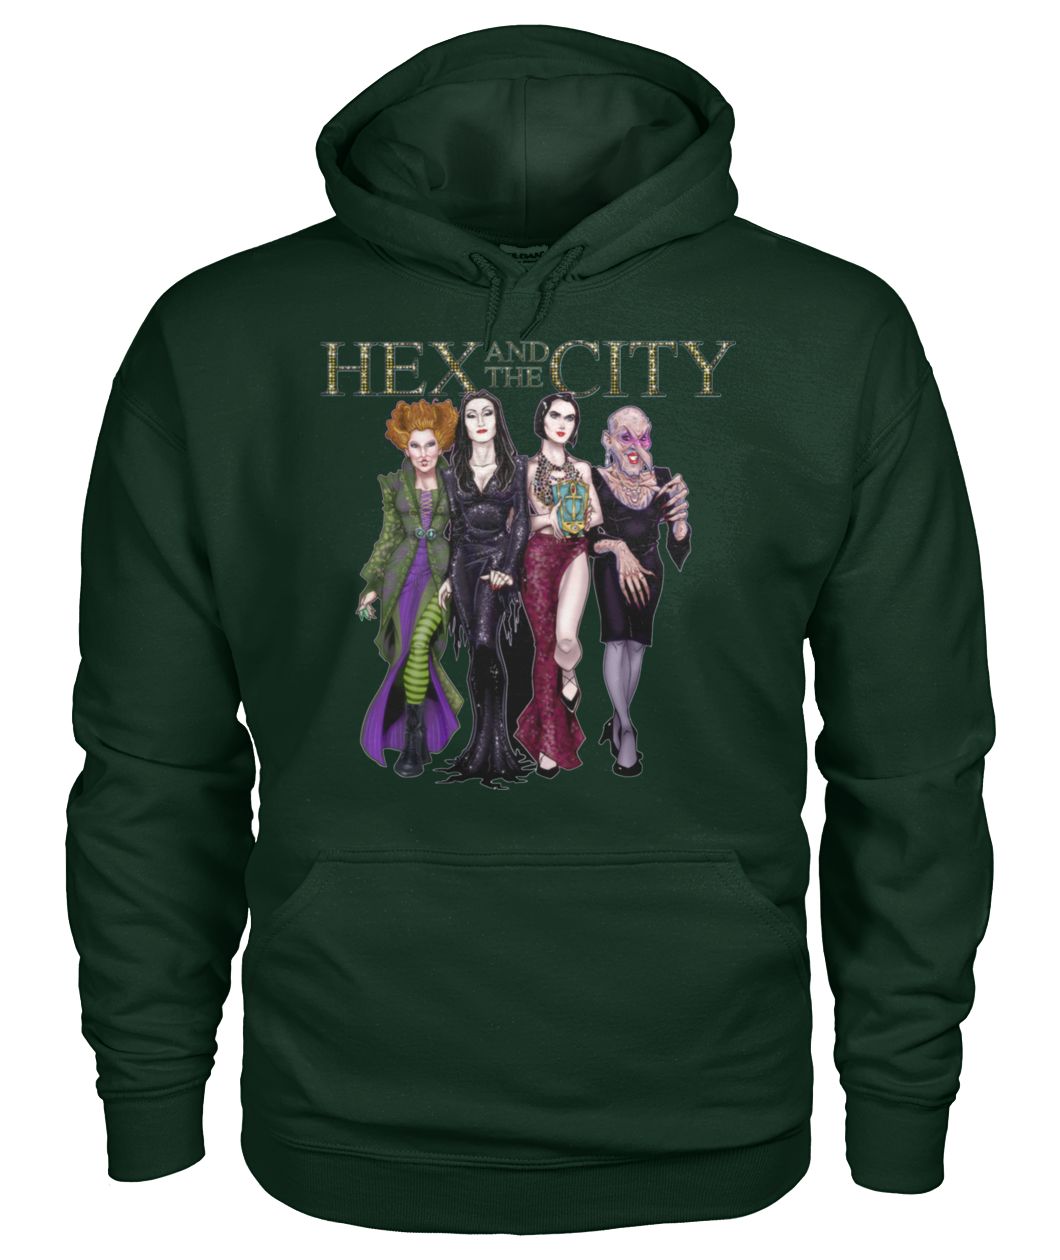 Hex and the city gildan hoodie